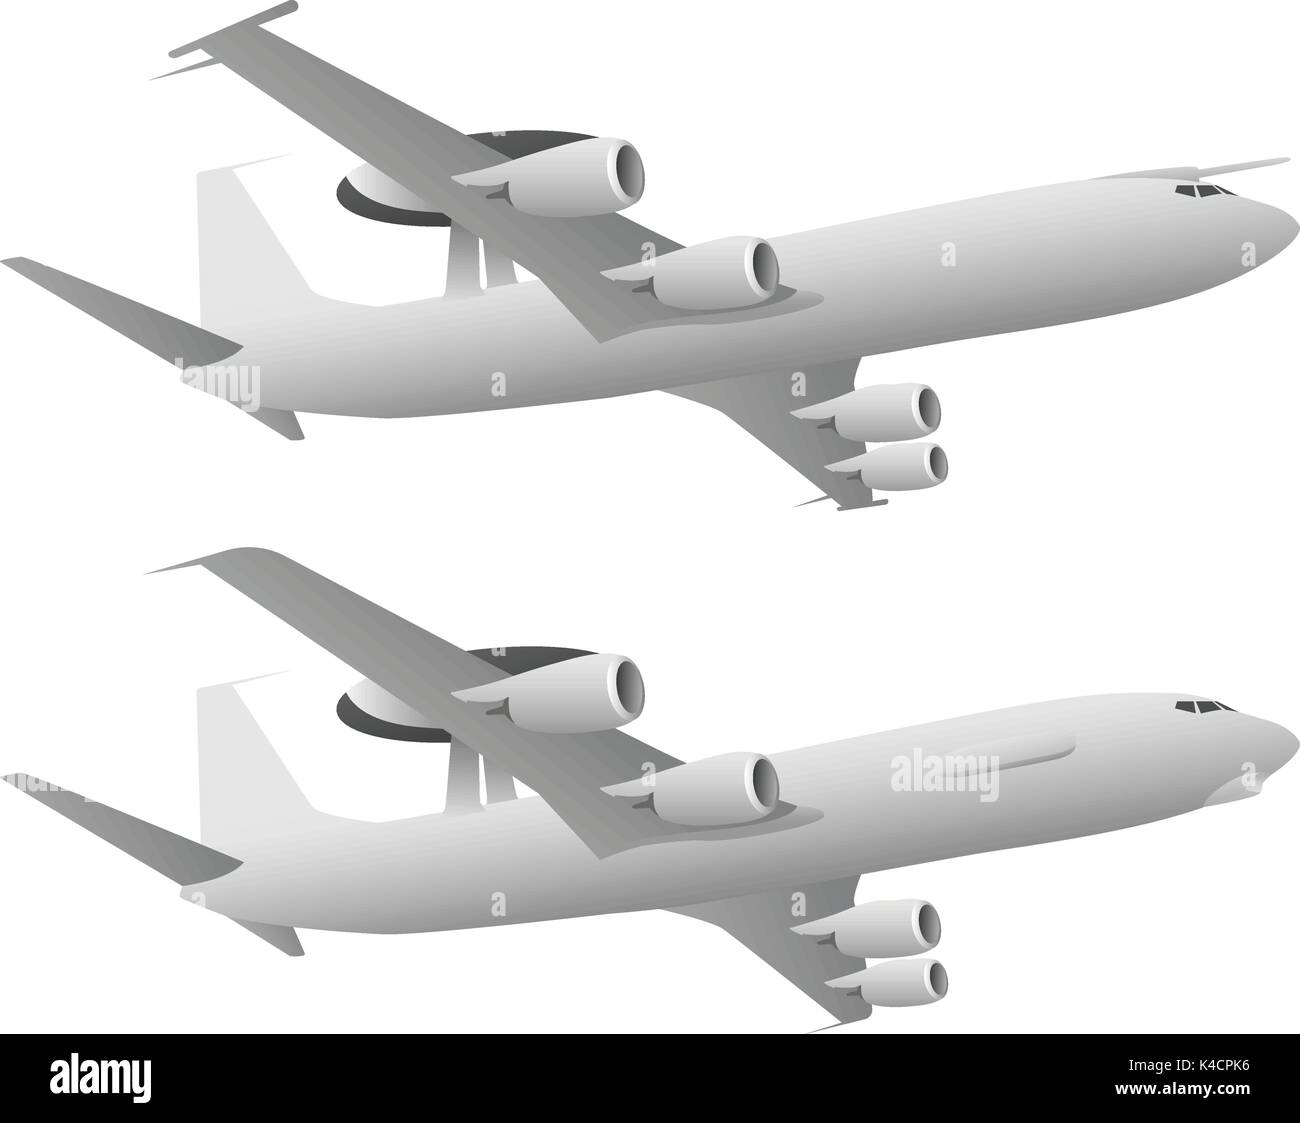 Les AWACS Airborne Warning and Control System Aircraft Illustration de Vecteur